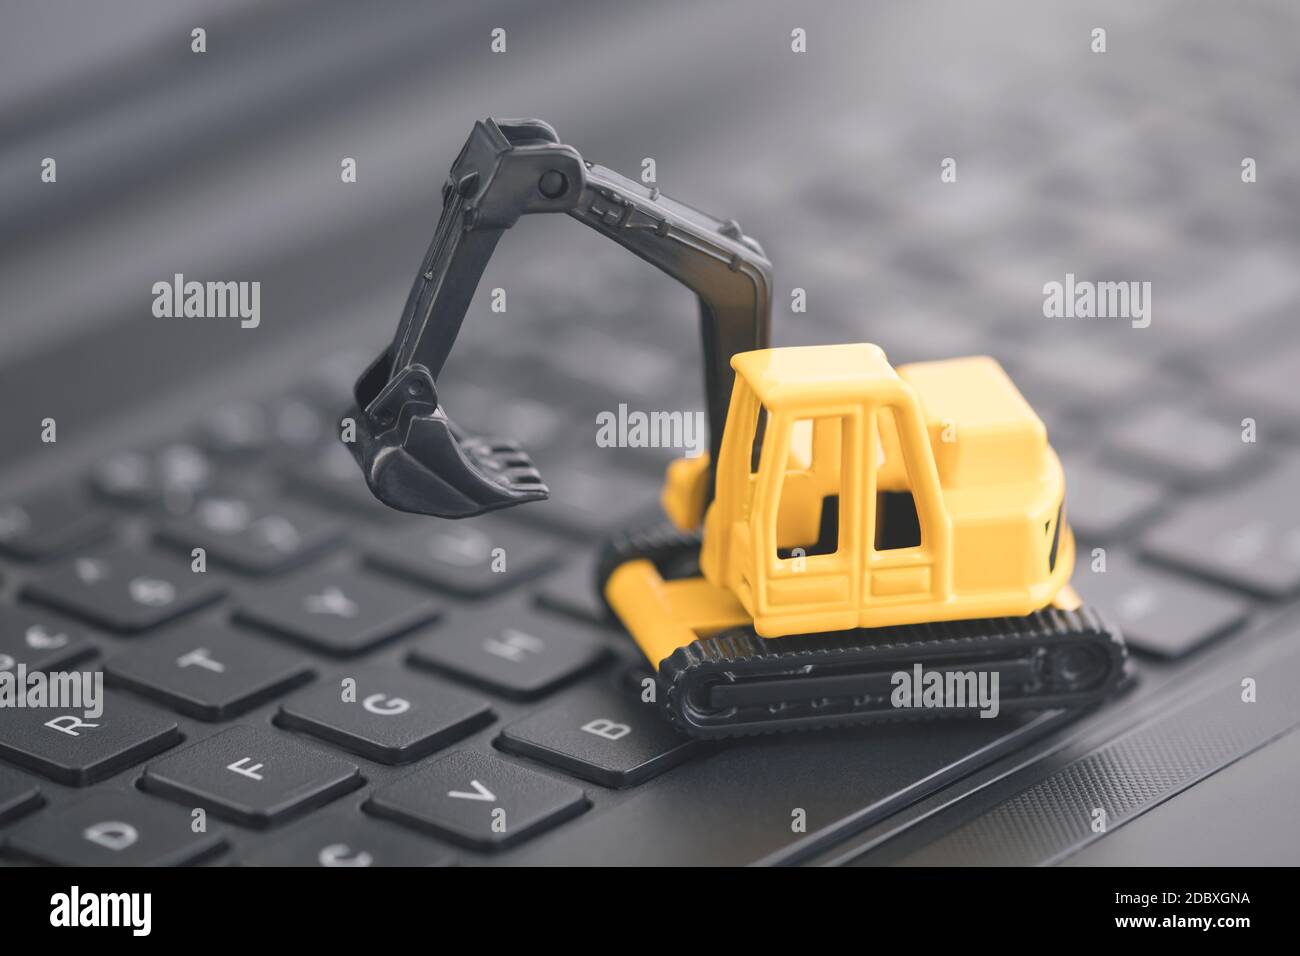 Excavator miniature working on black laptop keybaord Stock Photo